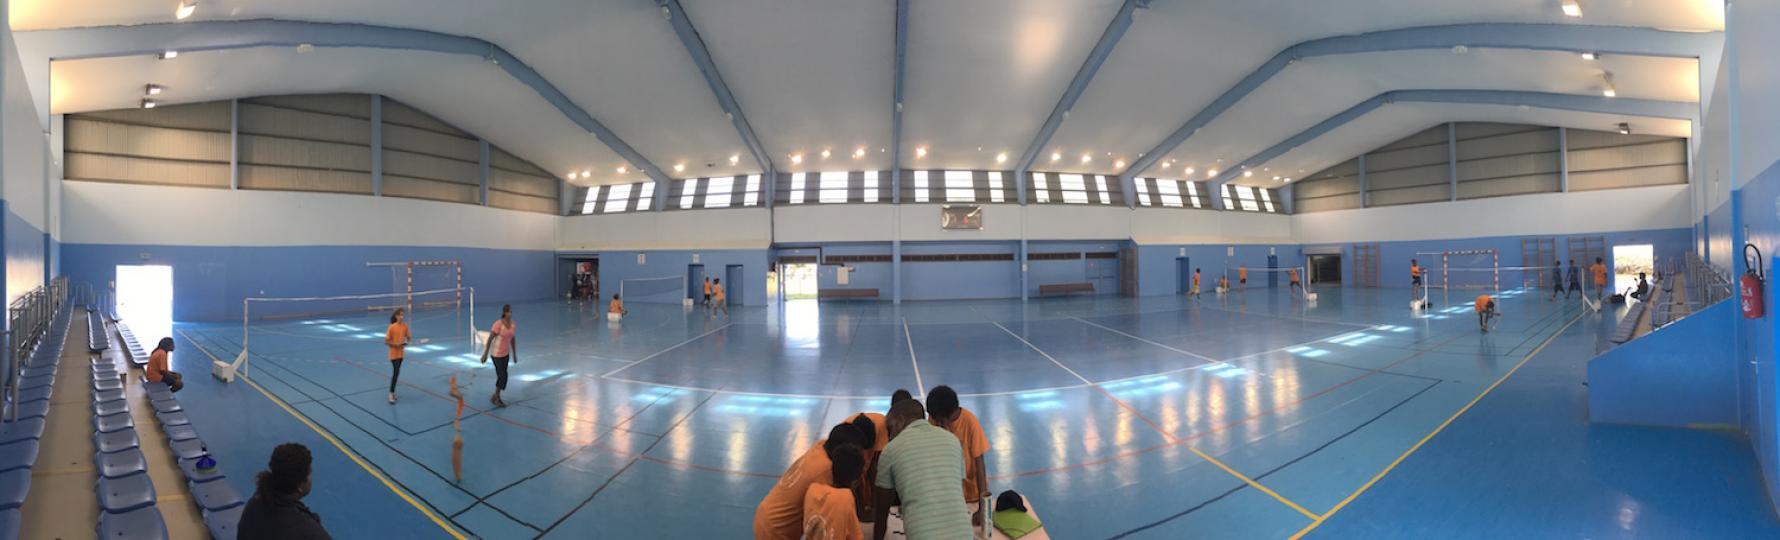 Salle omnisports de Hnasse-Lifou